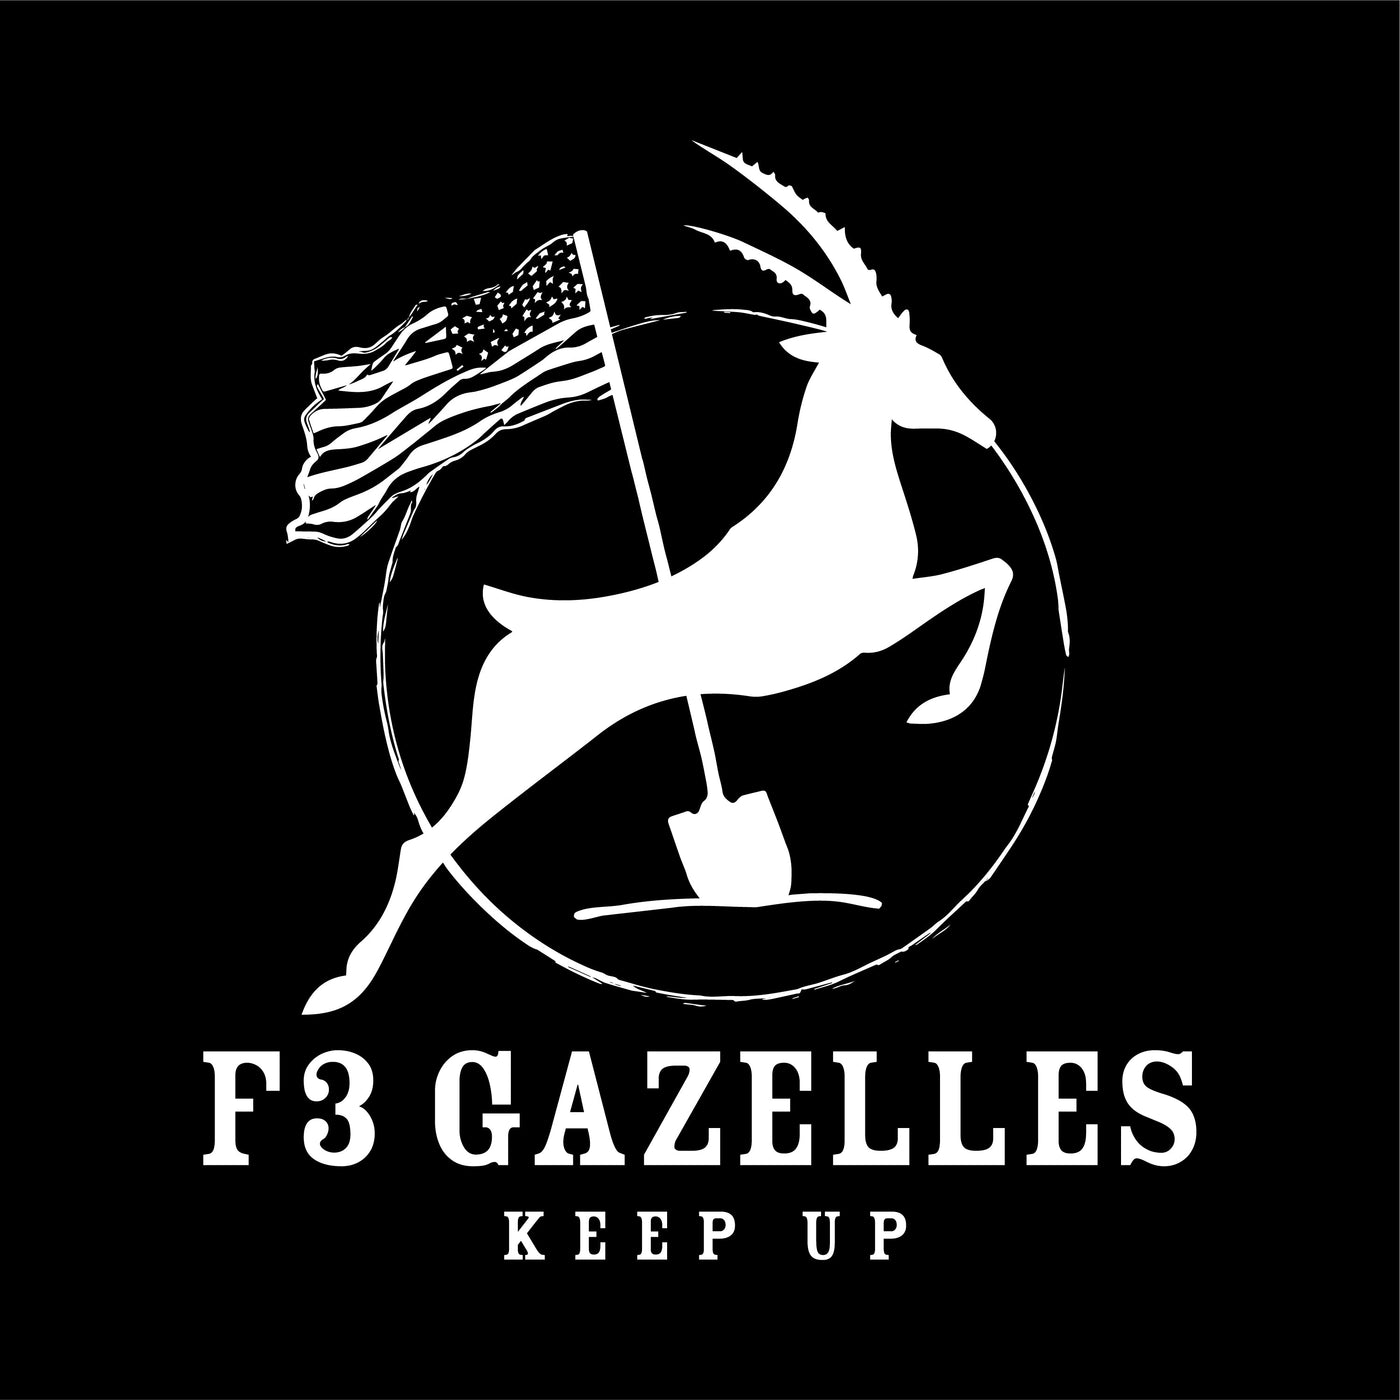 CLEARANCE ITEM - F3 Gazelles Keep Up - Sport-Tek Ultimate Performance Crew (Black)